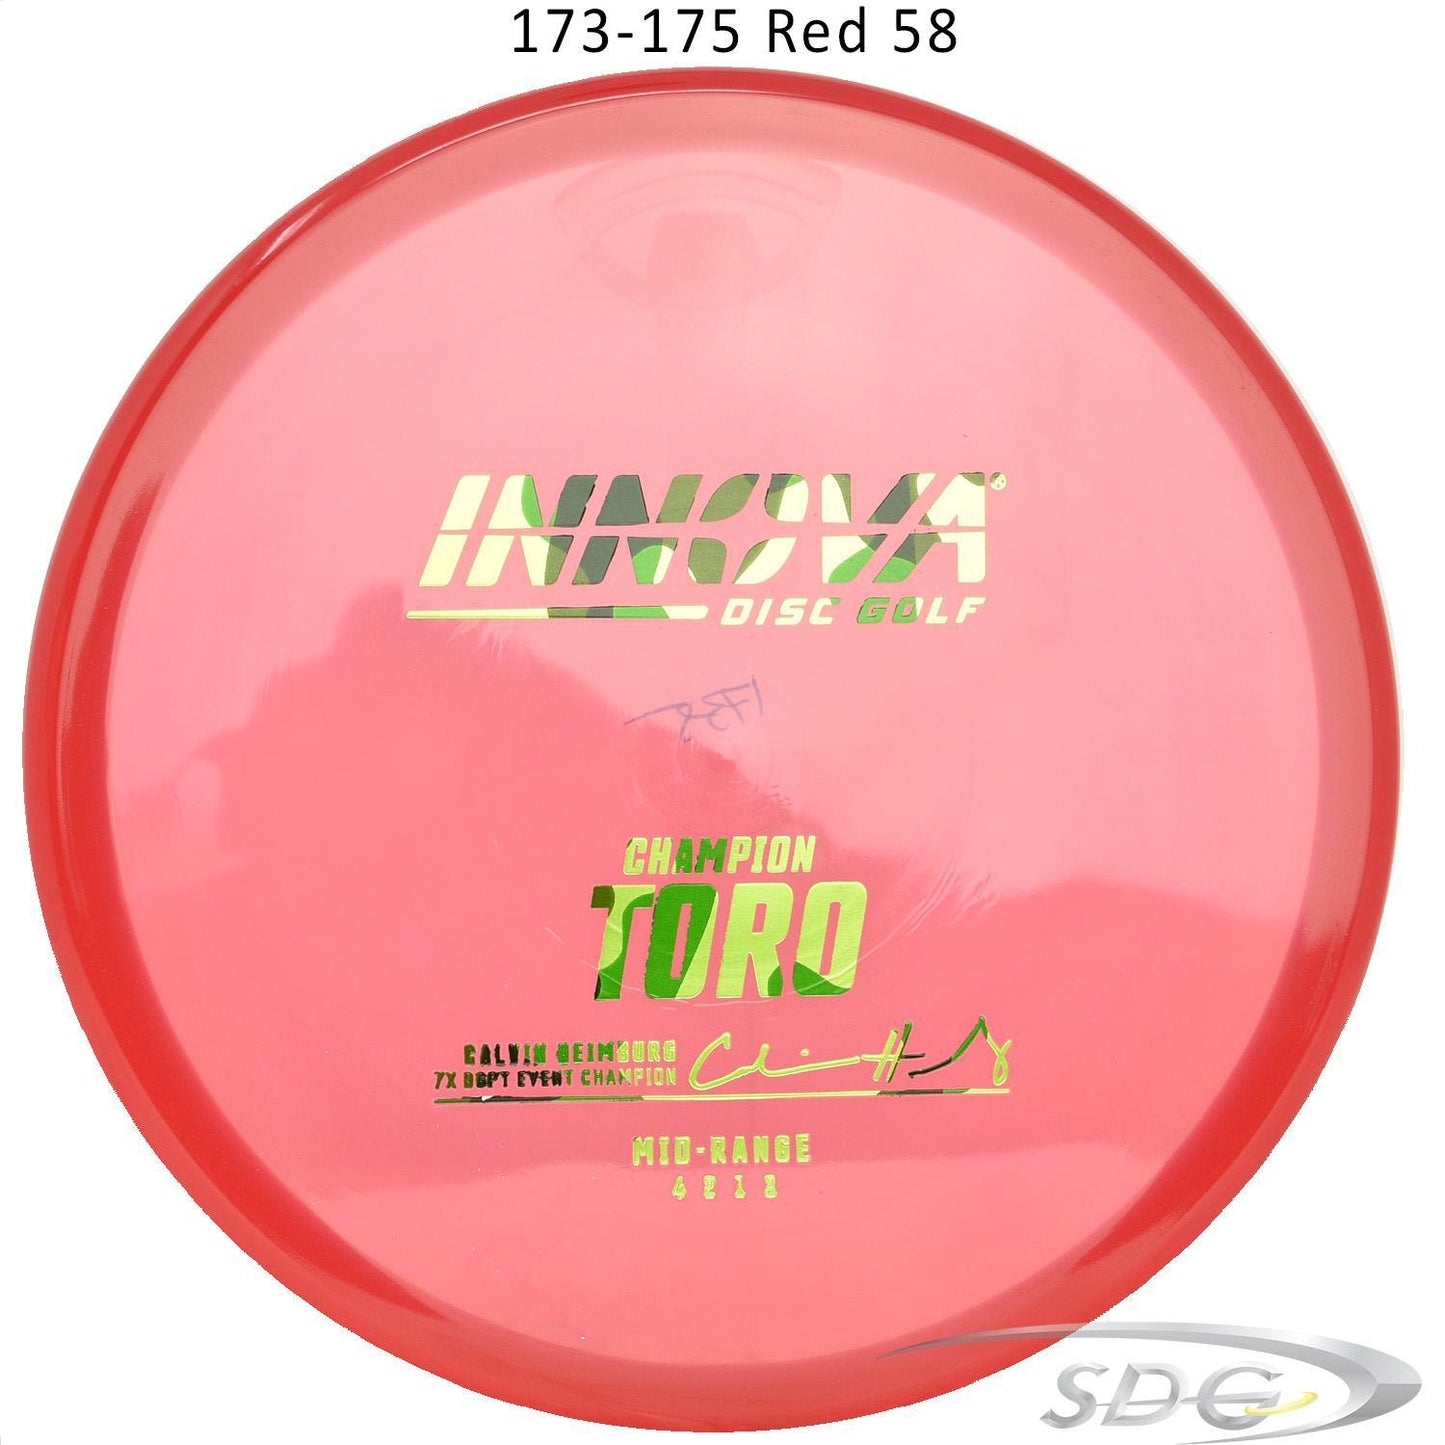 innova-champion-toro-calvin-heimburg-signature-disc-golf-mid-range 173-175 Red 58 